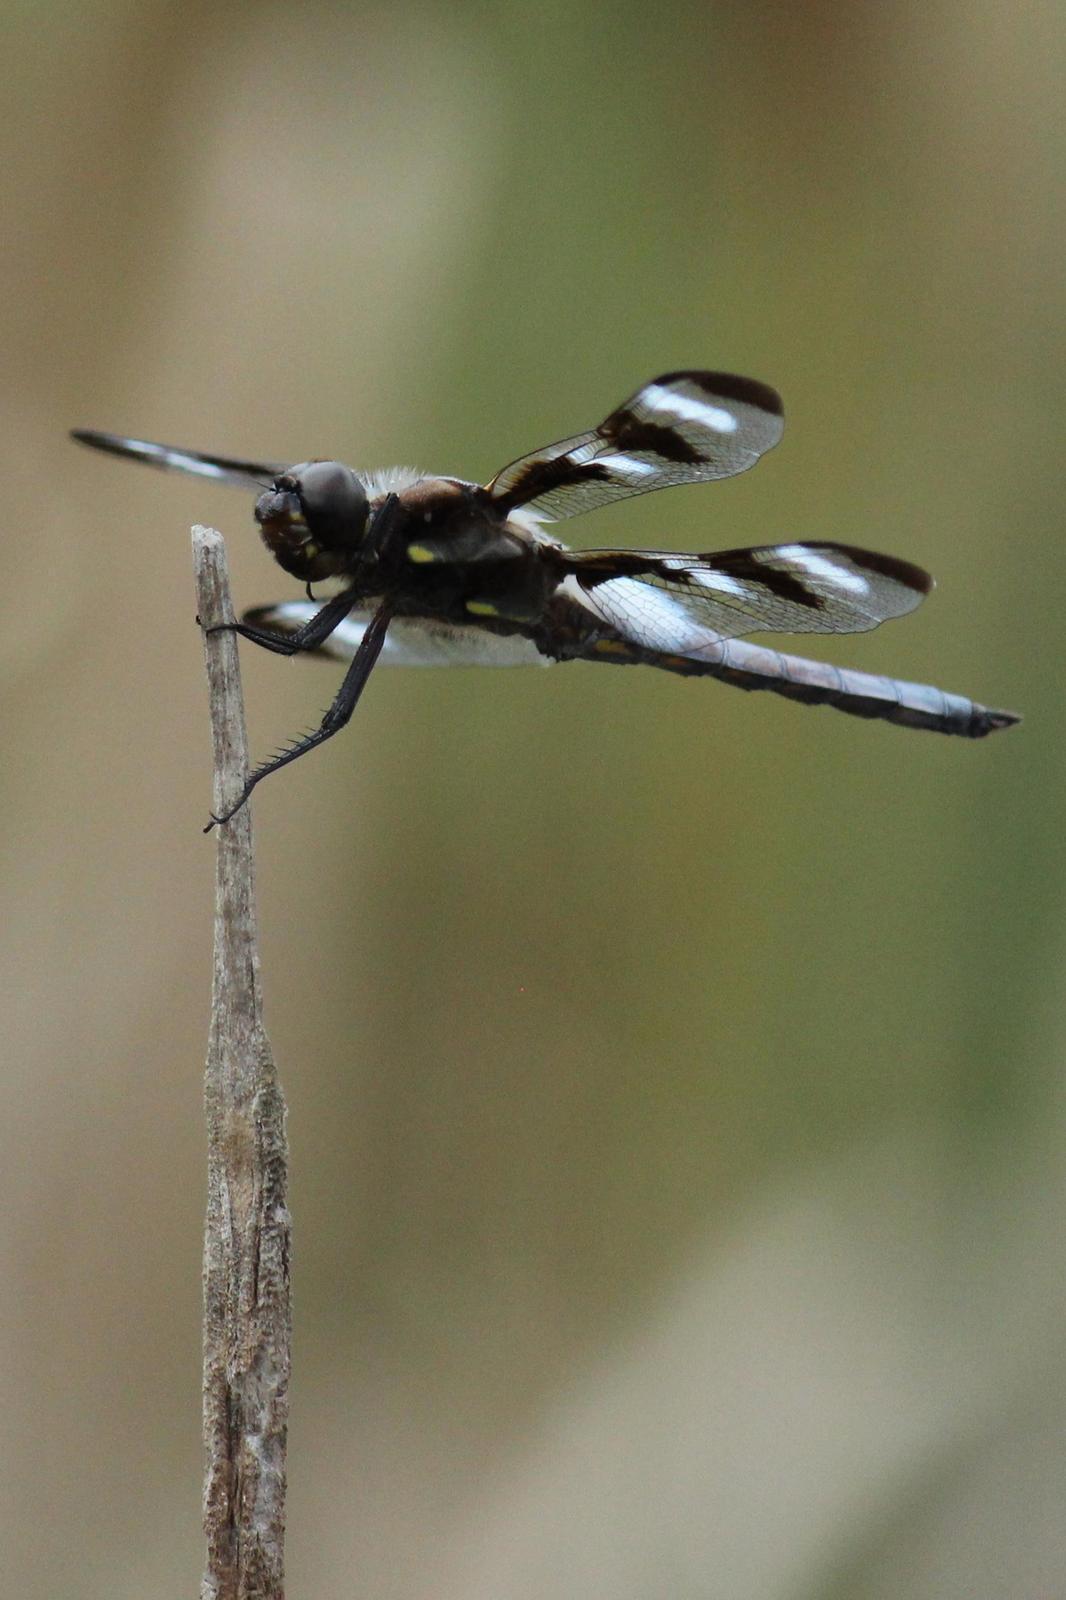 Twelve-spotted Skimmer Photo by Kristy Baker